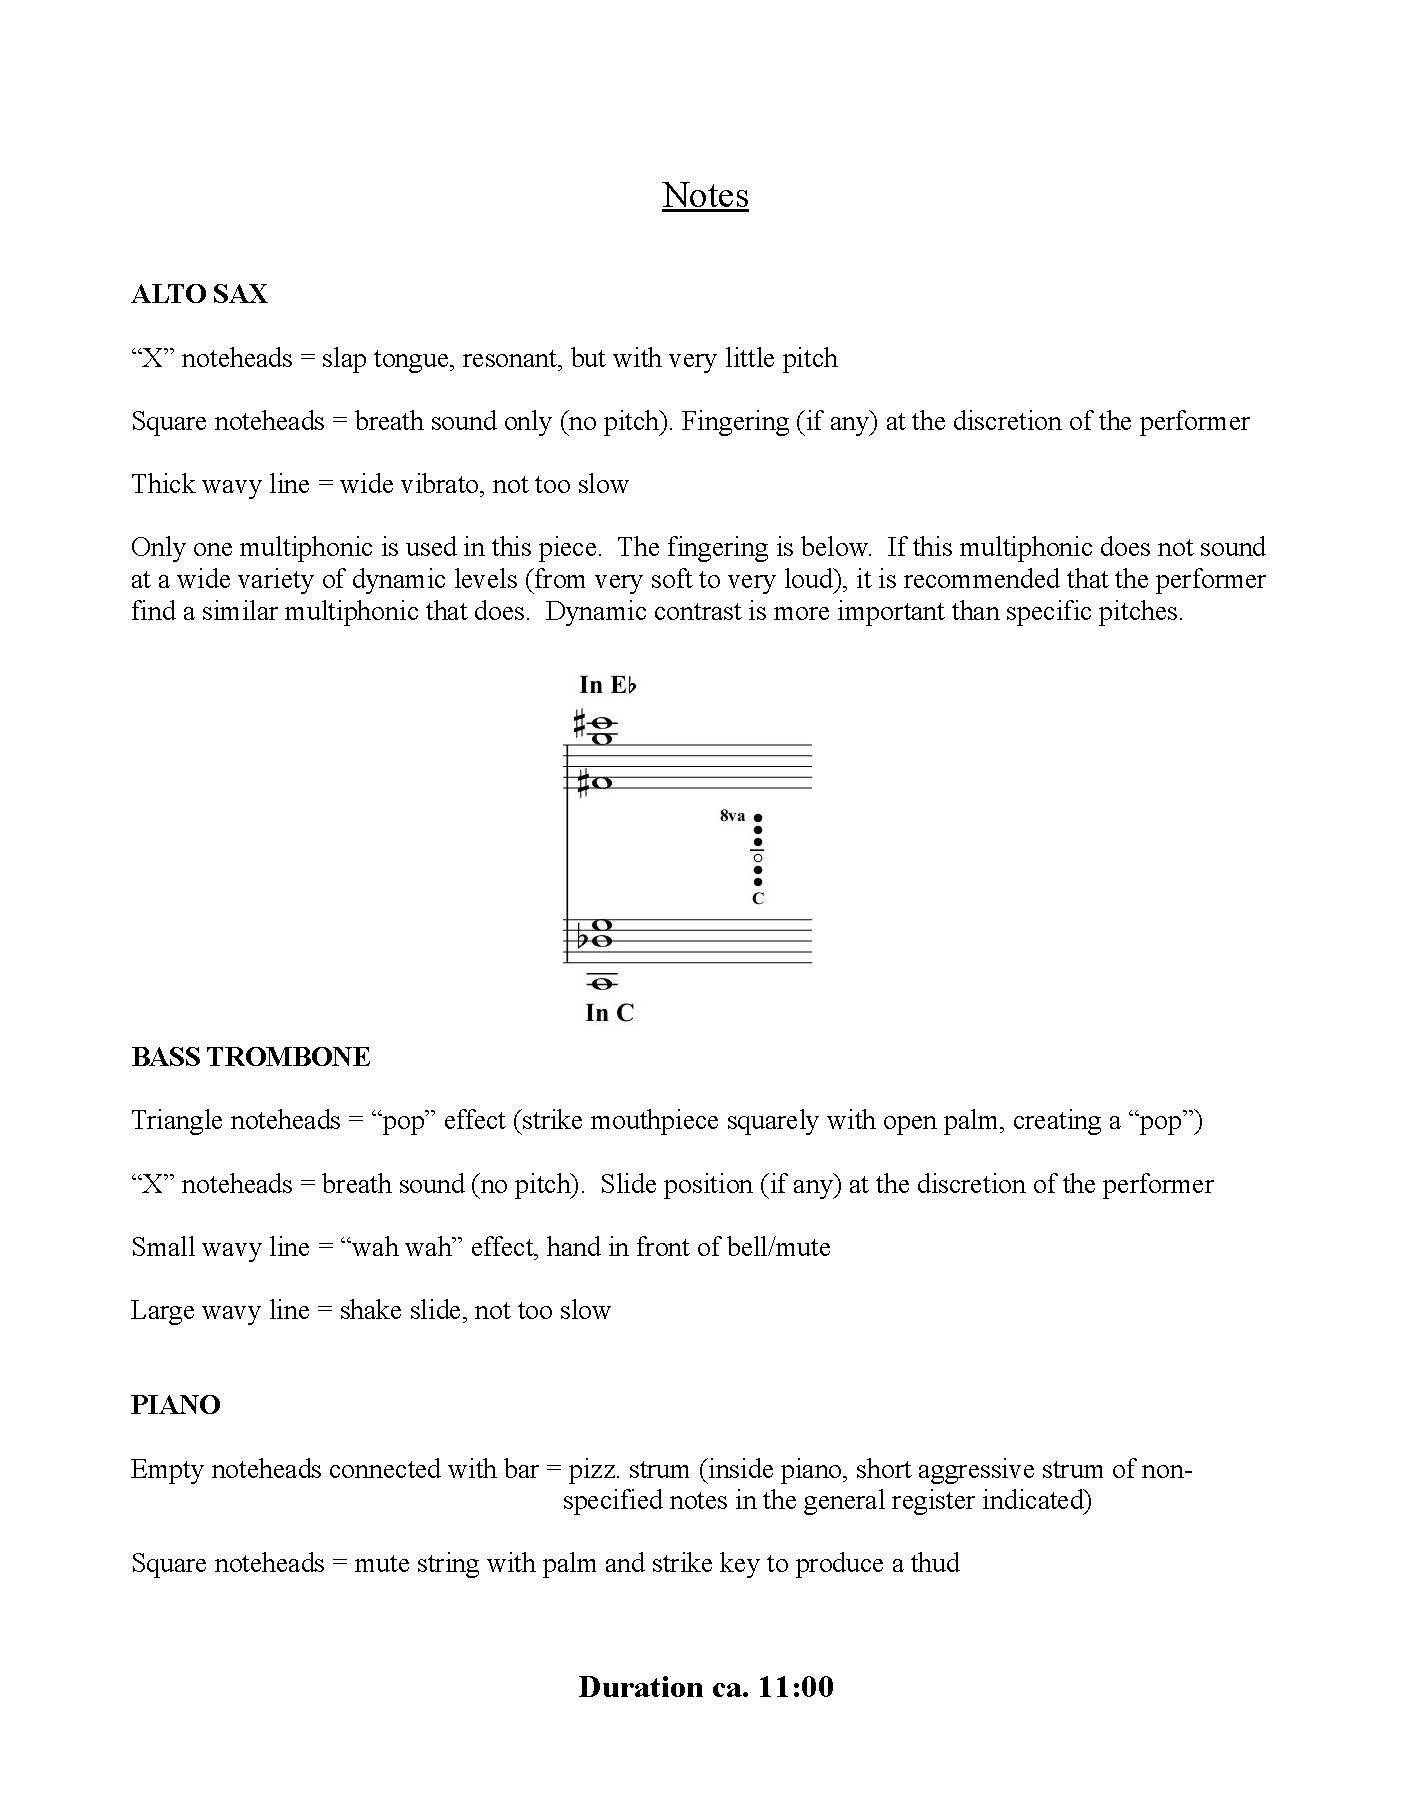 alice + zoltan 4ever - Complete Score_Page_05.jpg